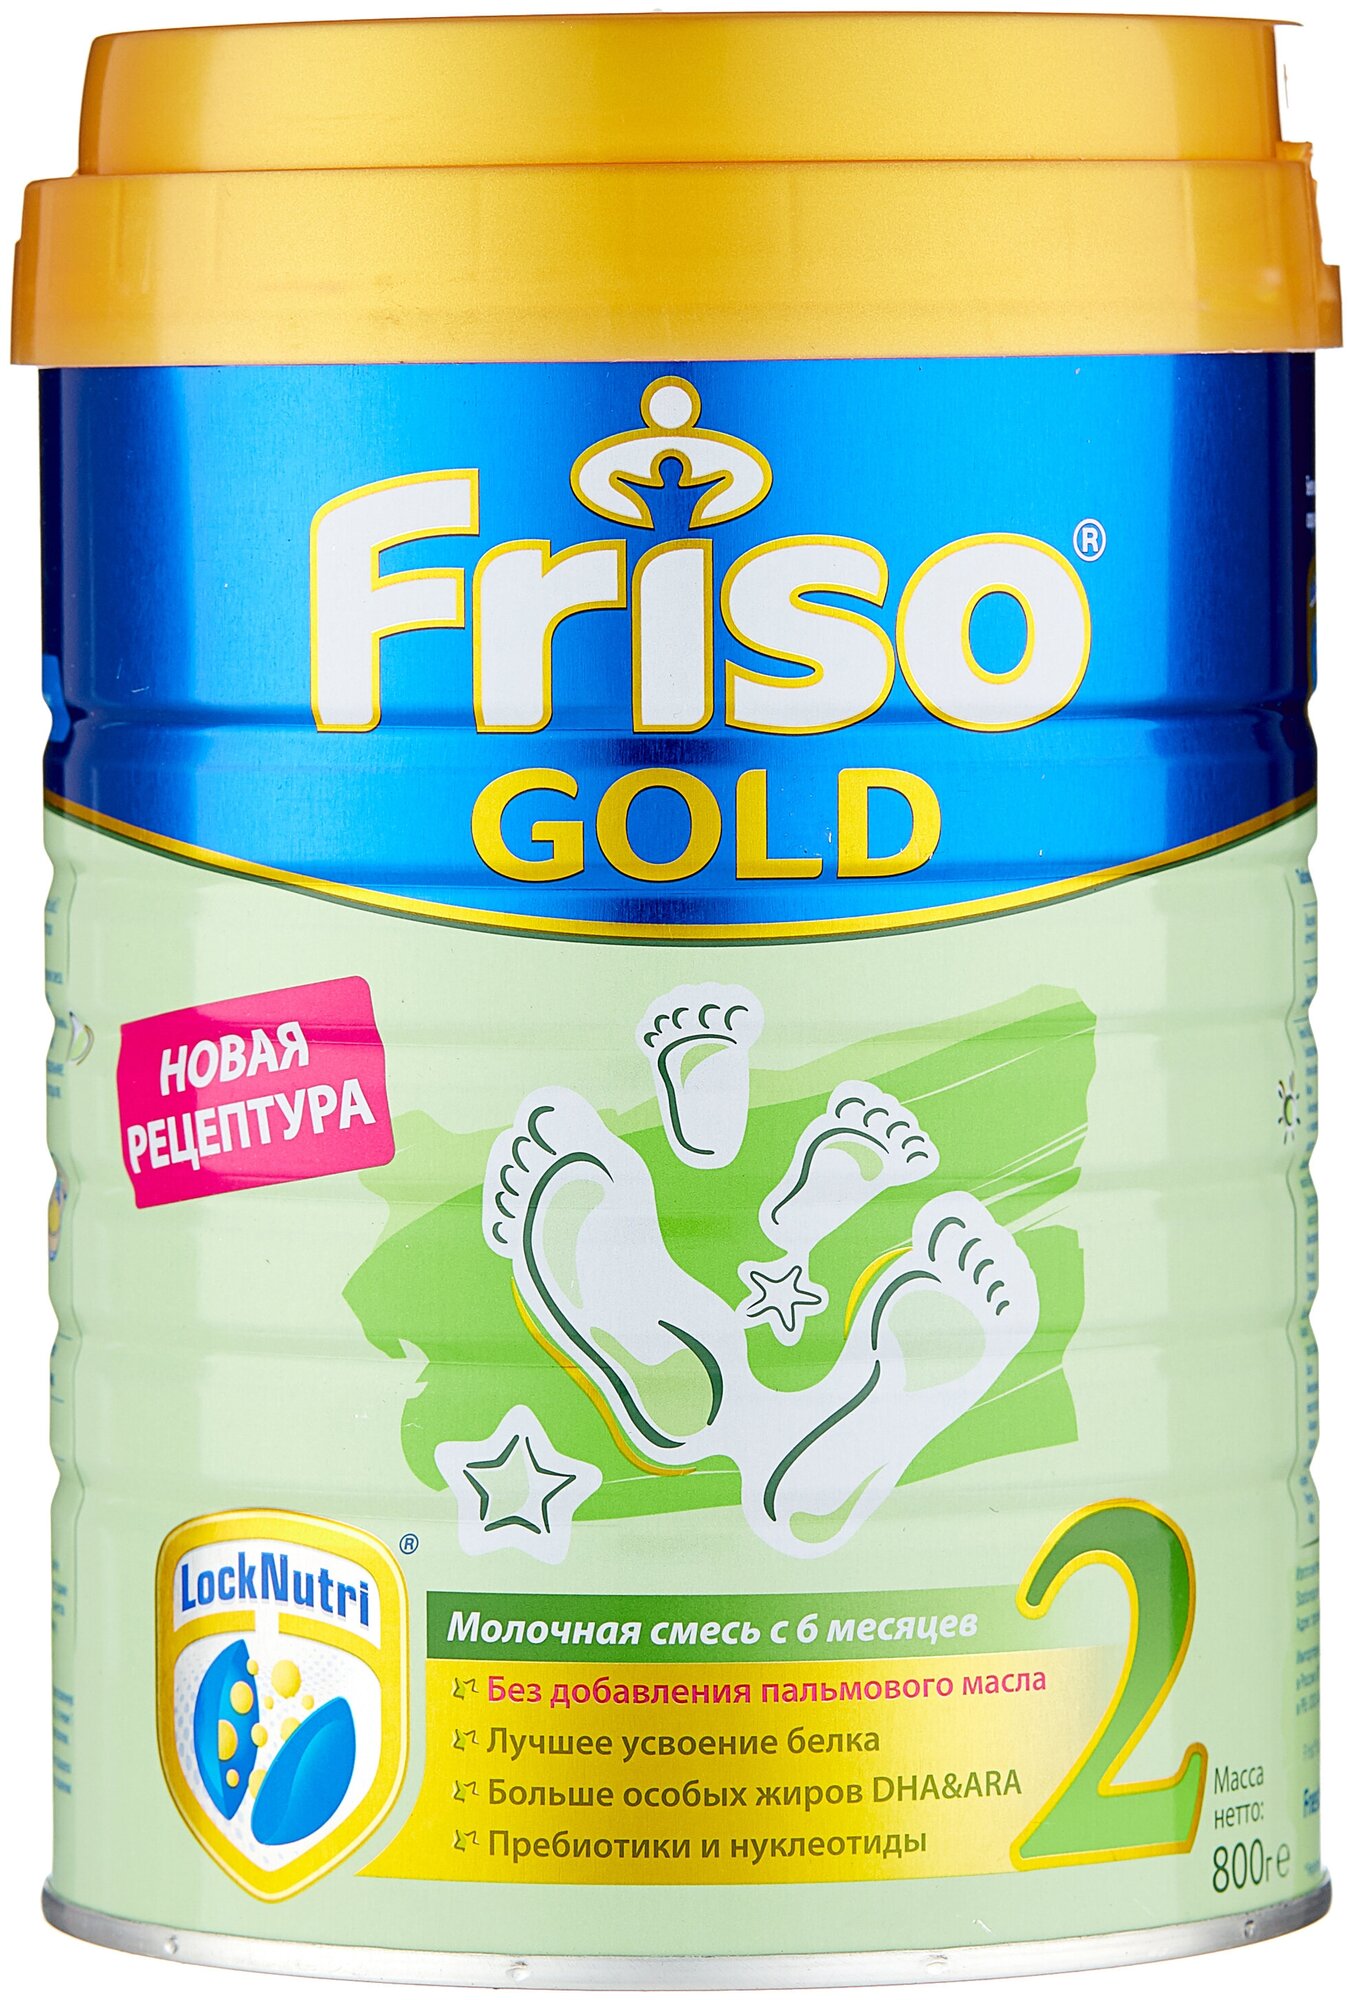 Friso   New 2 Gold LockNutri  6-12  800 